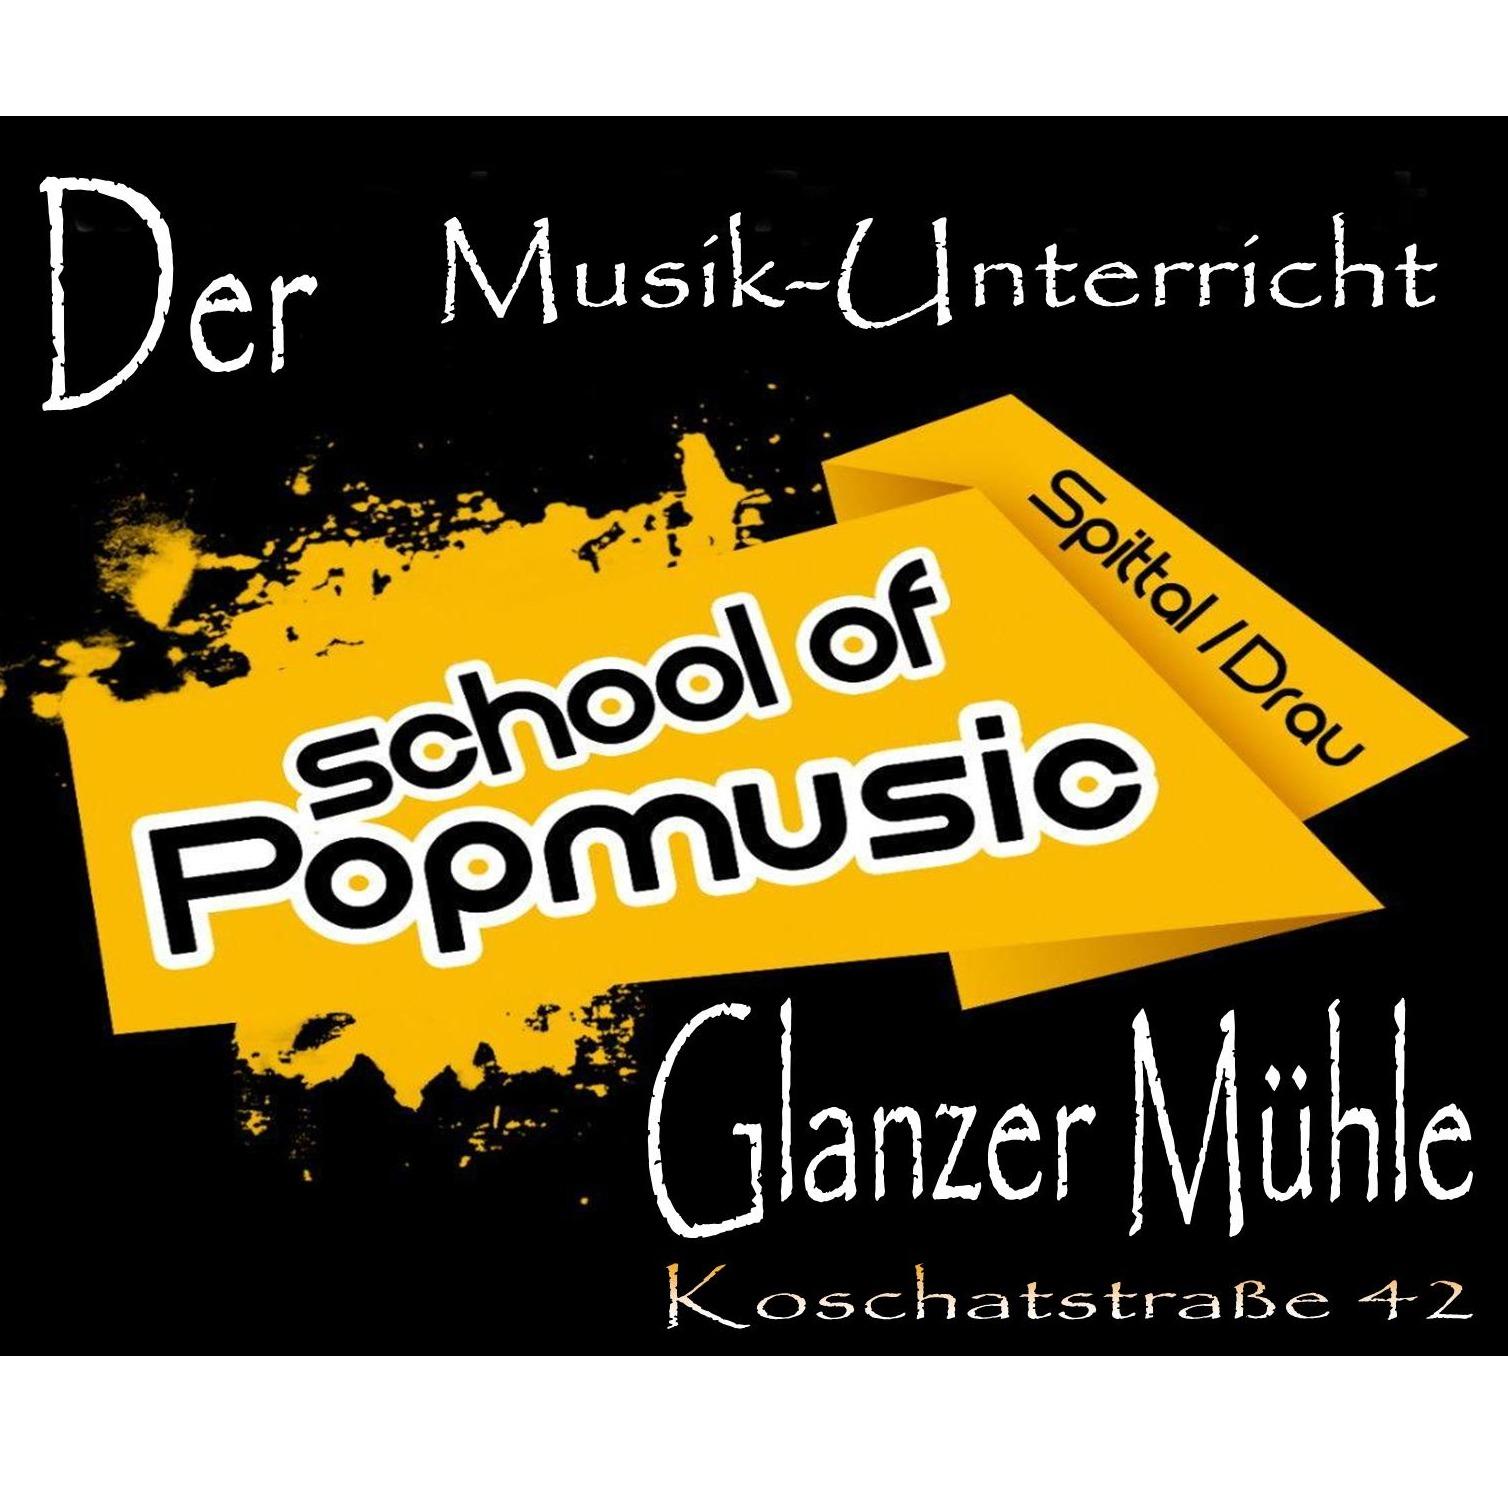 School of Popmusic Spittal, S.O.P. - Büro S. Petritz / Unterricht Koschatstraße 42- Eingang Badgasse 5 Logo